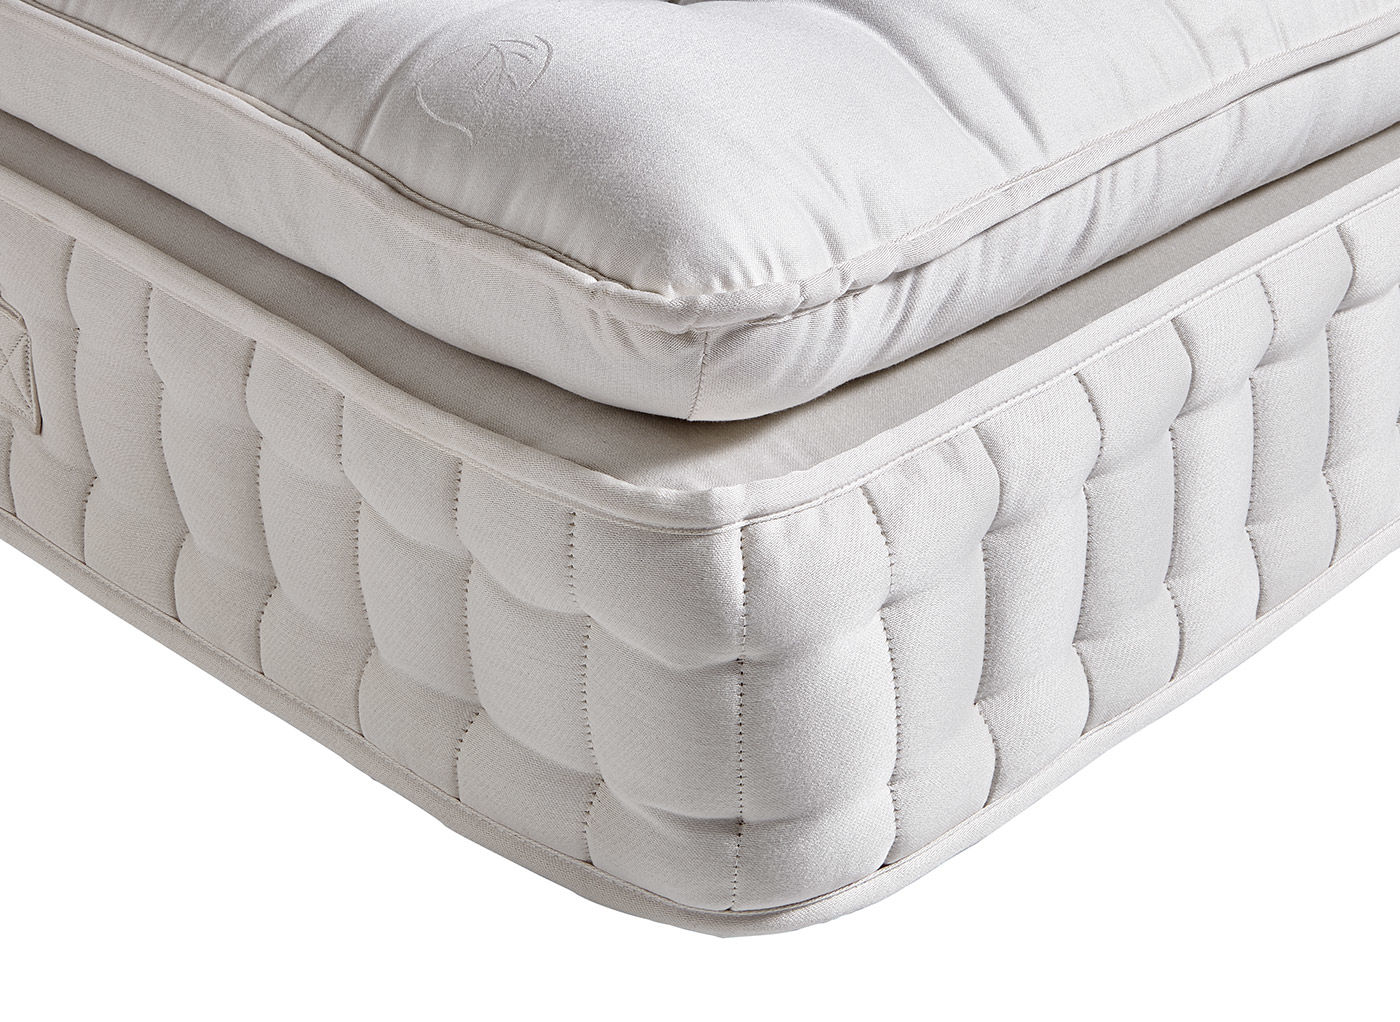 dromma medium soft mattress review